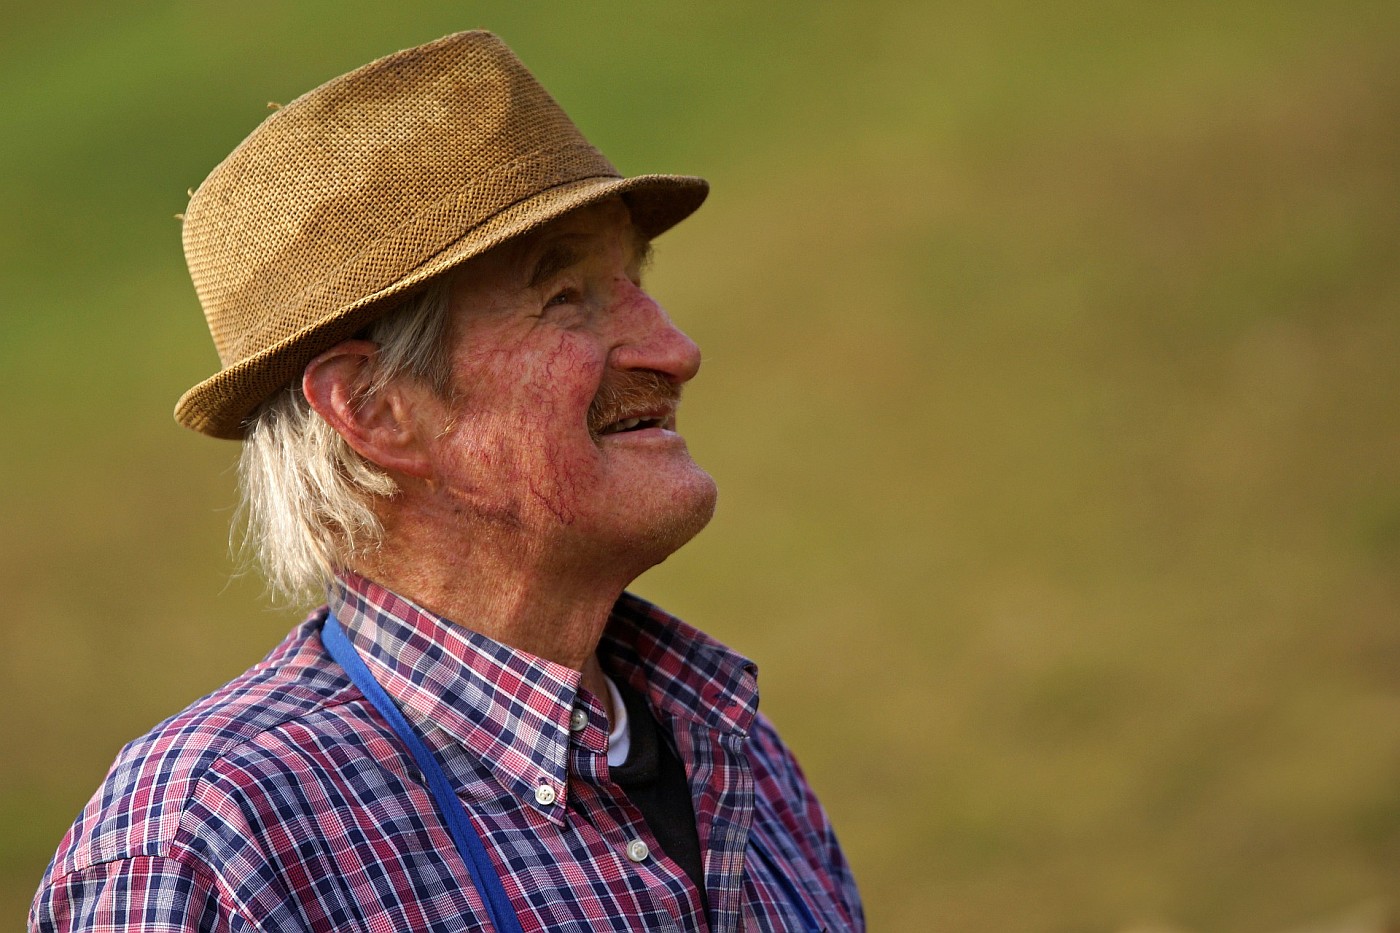 Farmer (c) www.pixabay.com